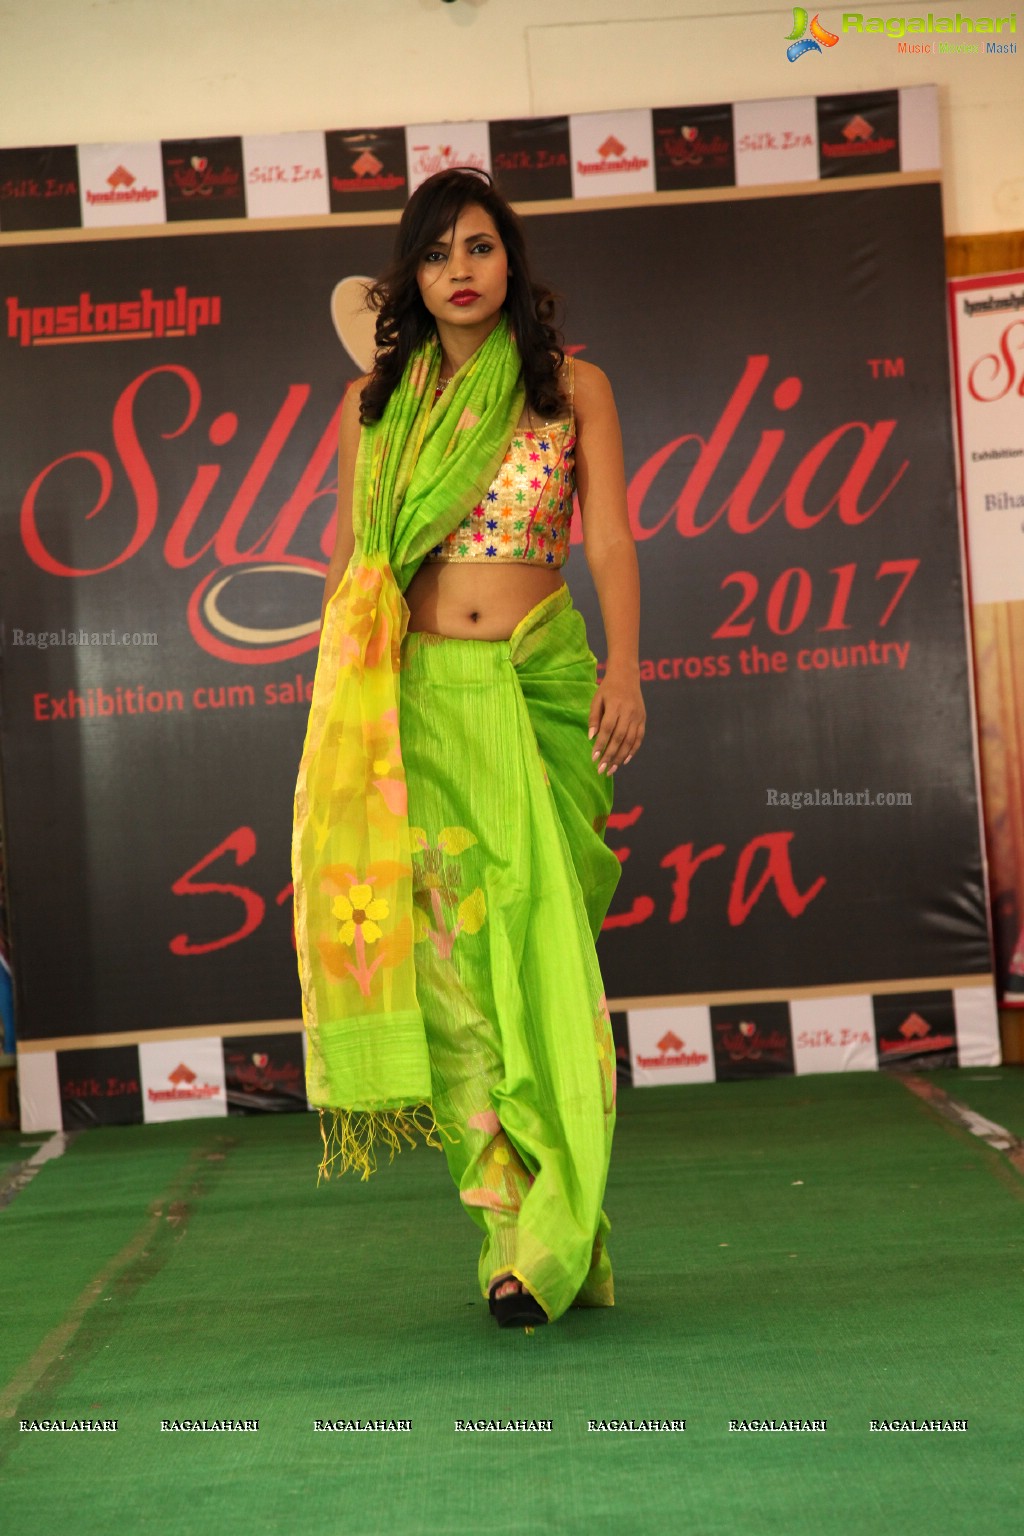 Handloom Fashion Forever by Silk India Expo at Sri Raja Rajeshwari Gardens, Secunderabad